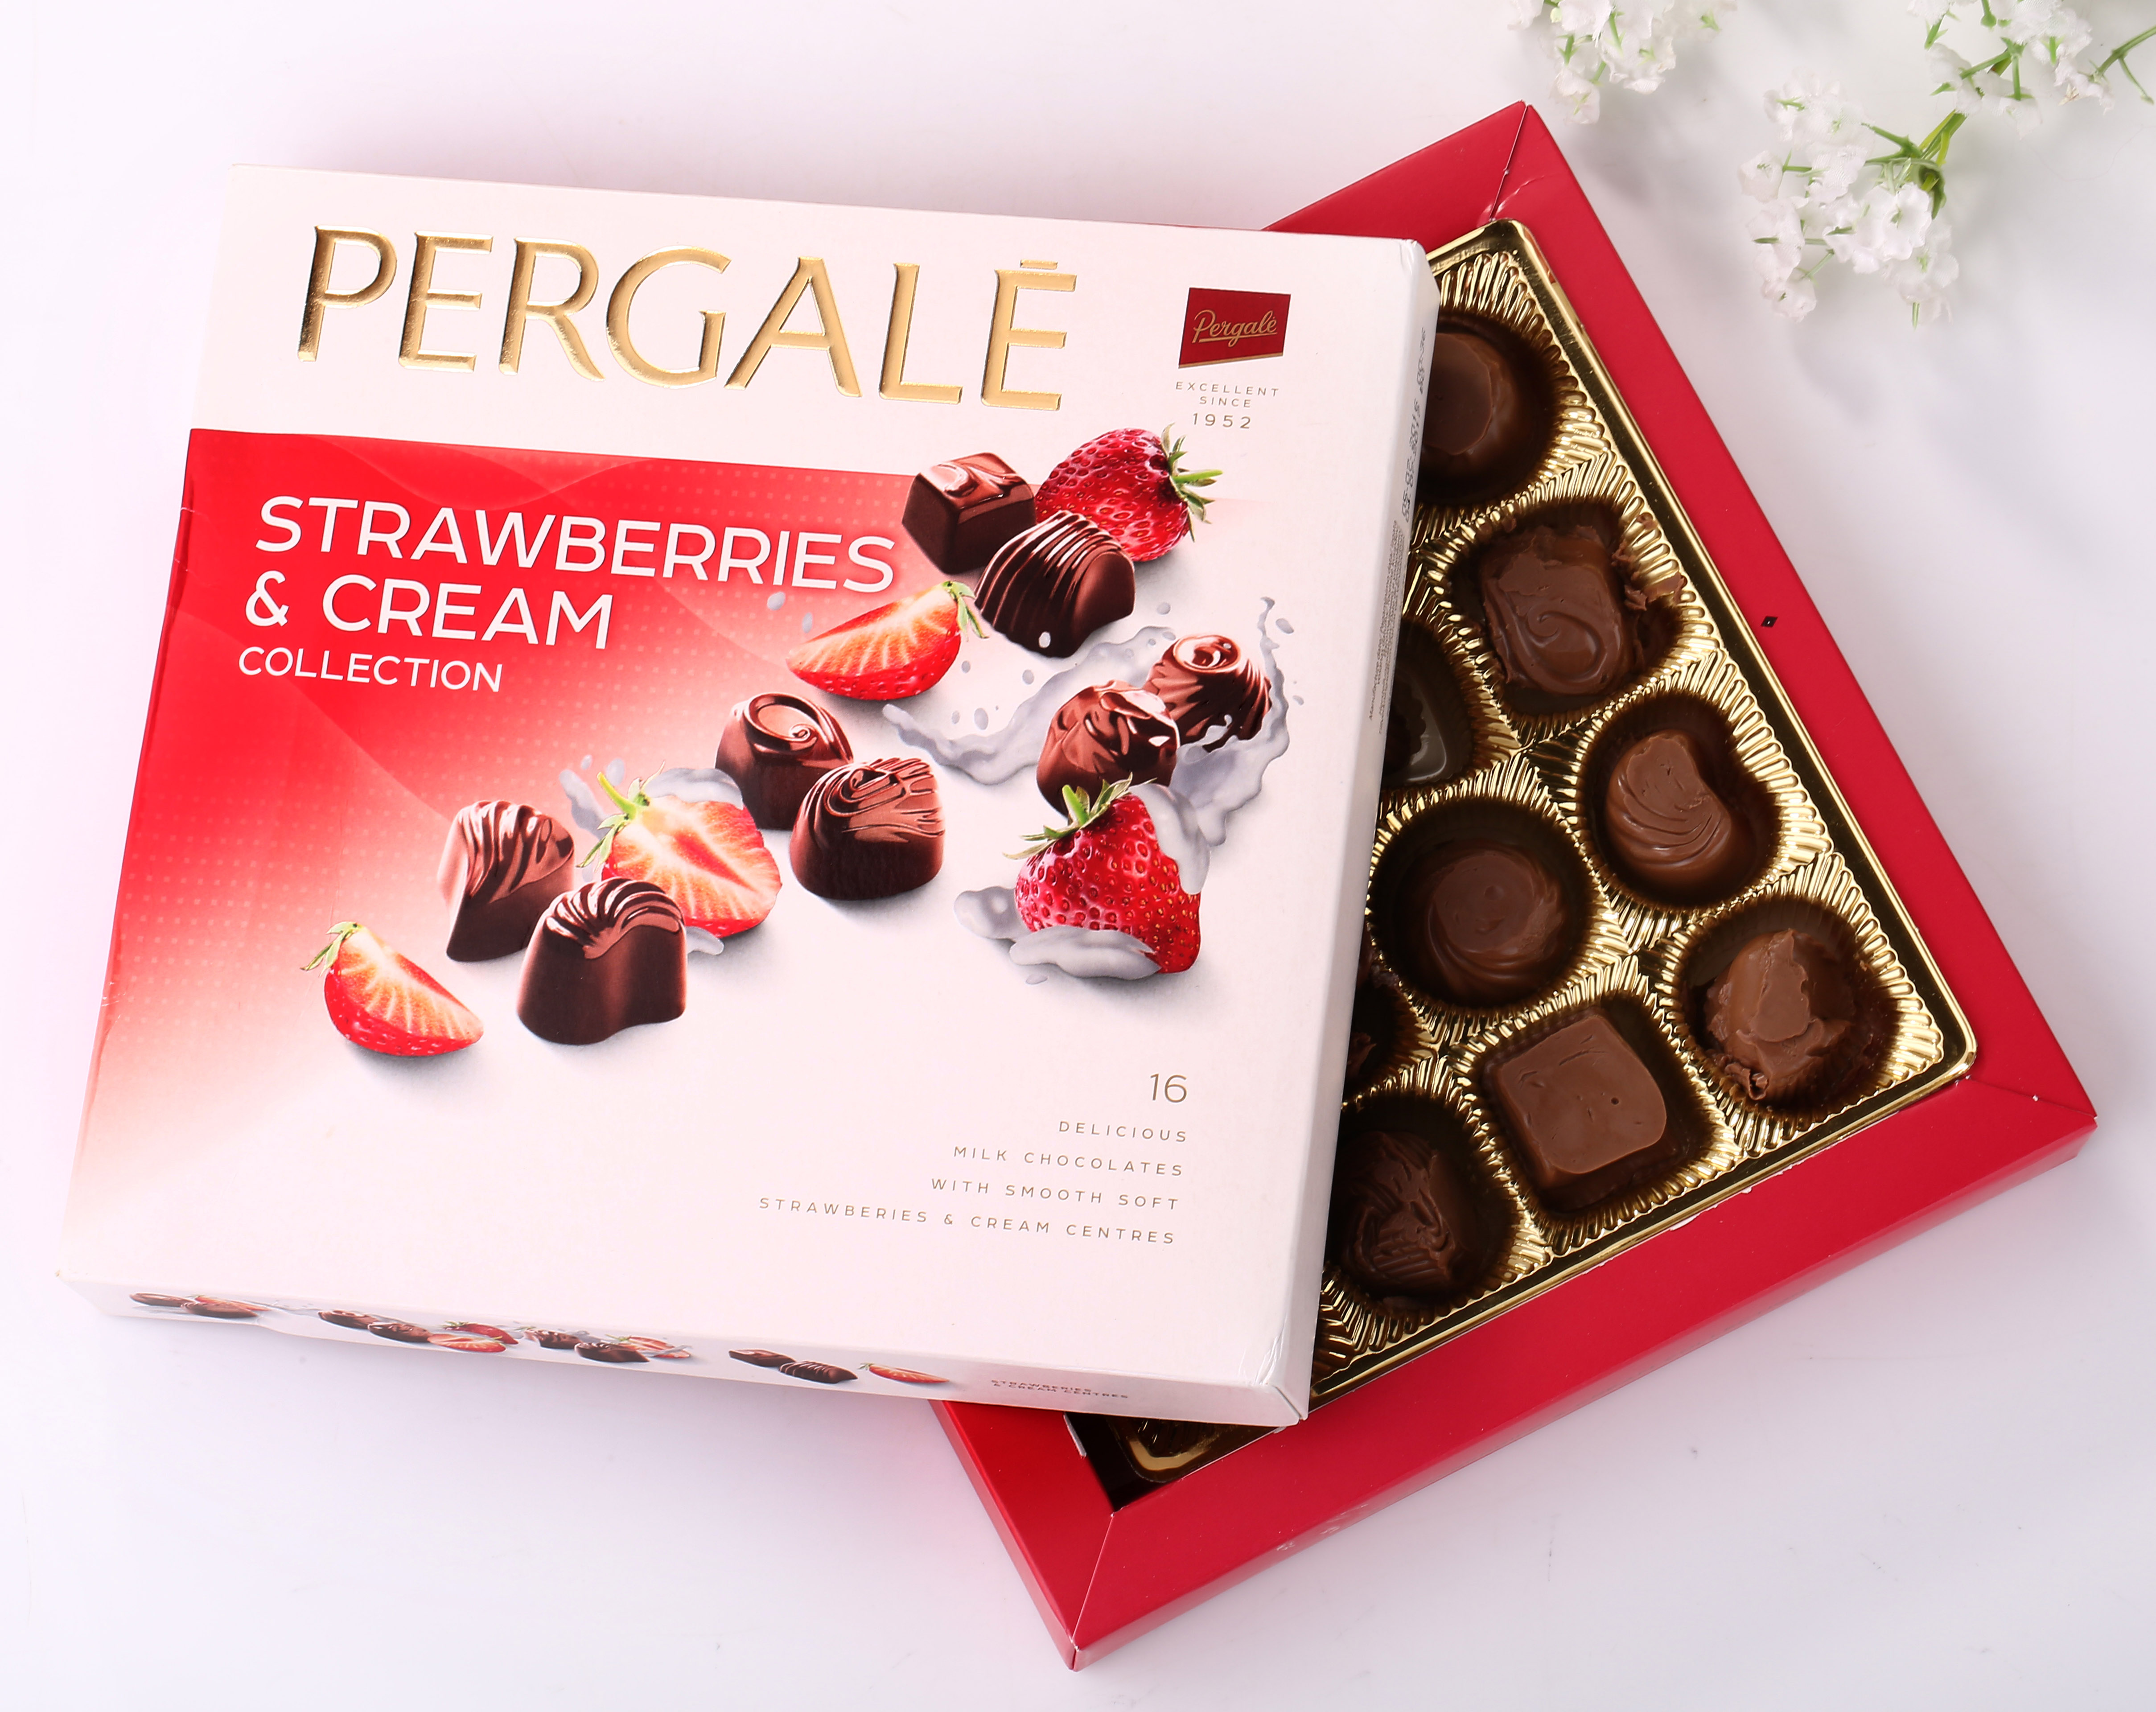 PERGALE strawberry cream sandwiched chocolates (gift boxes)